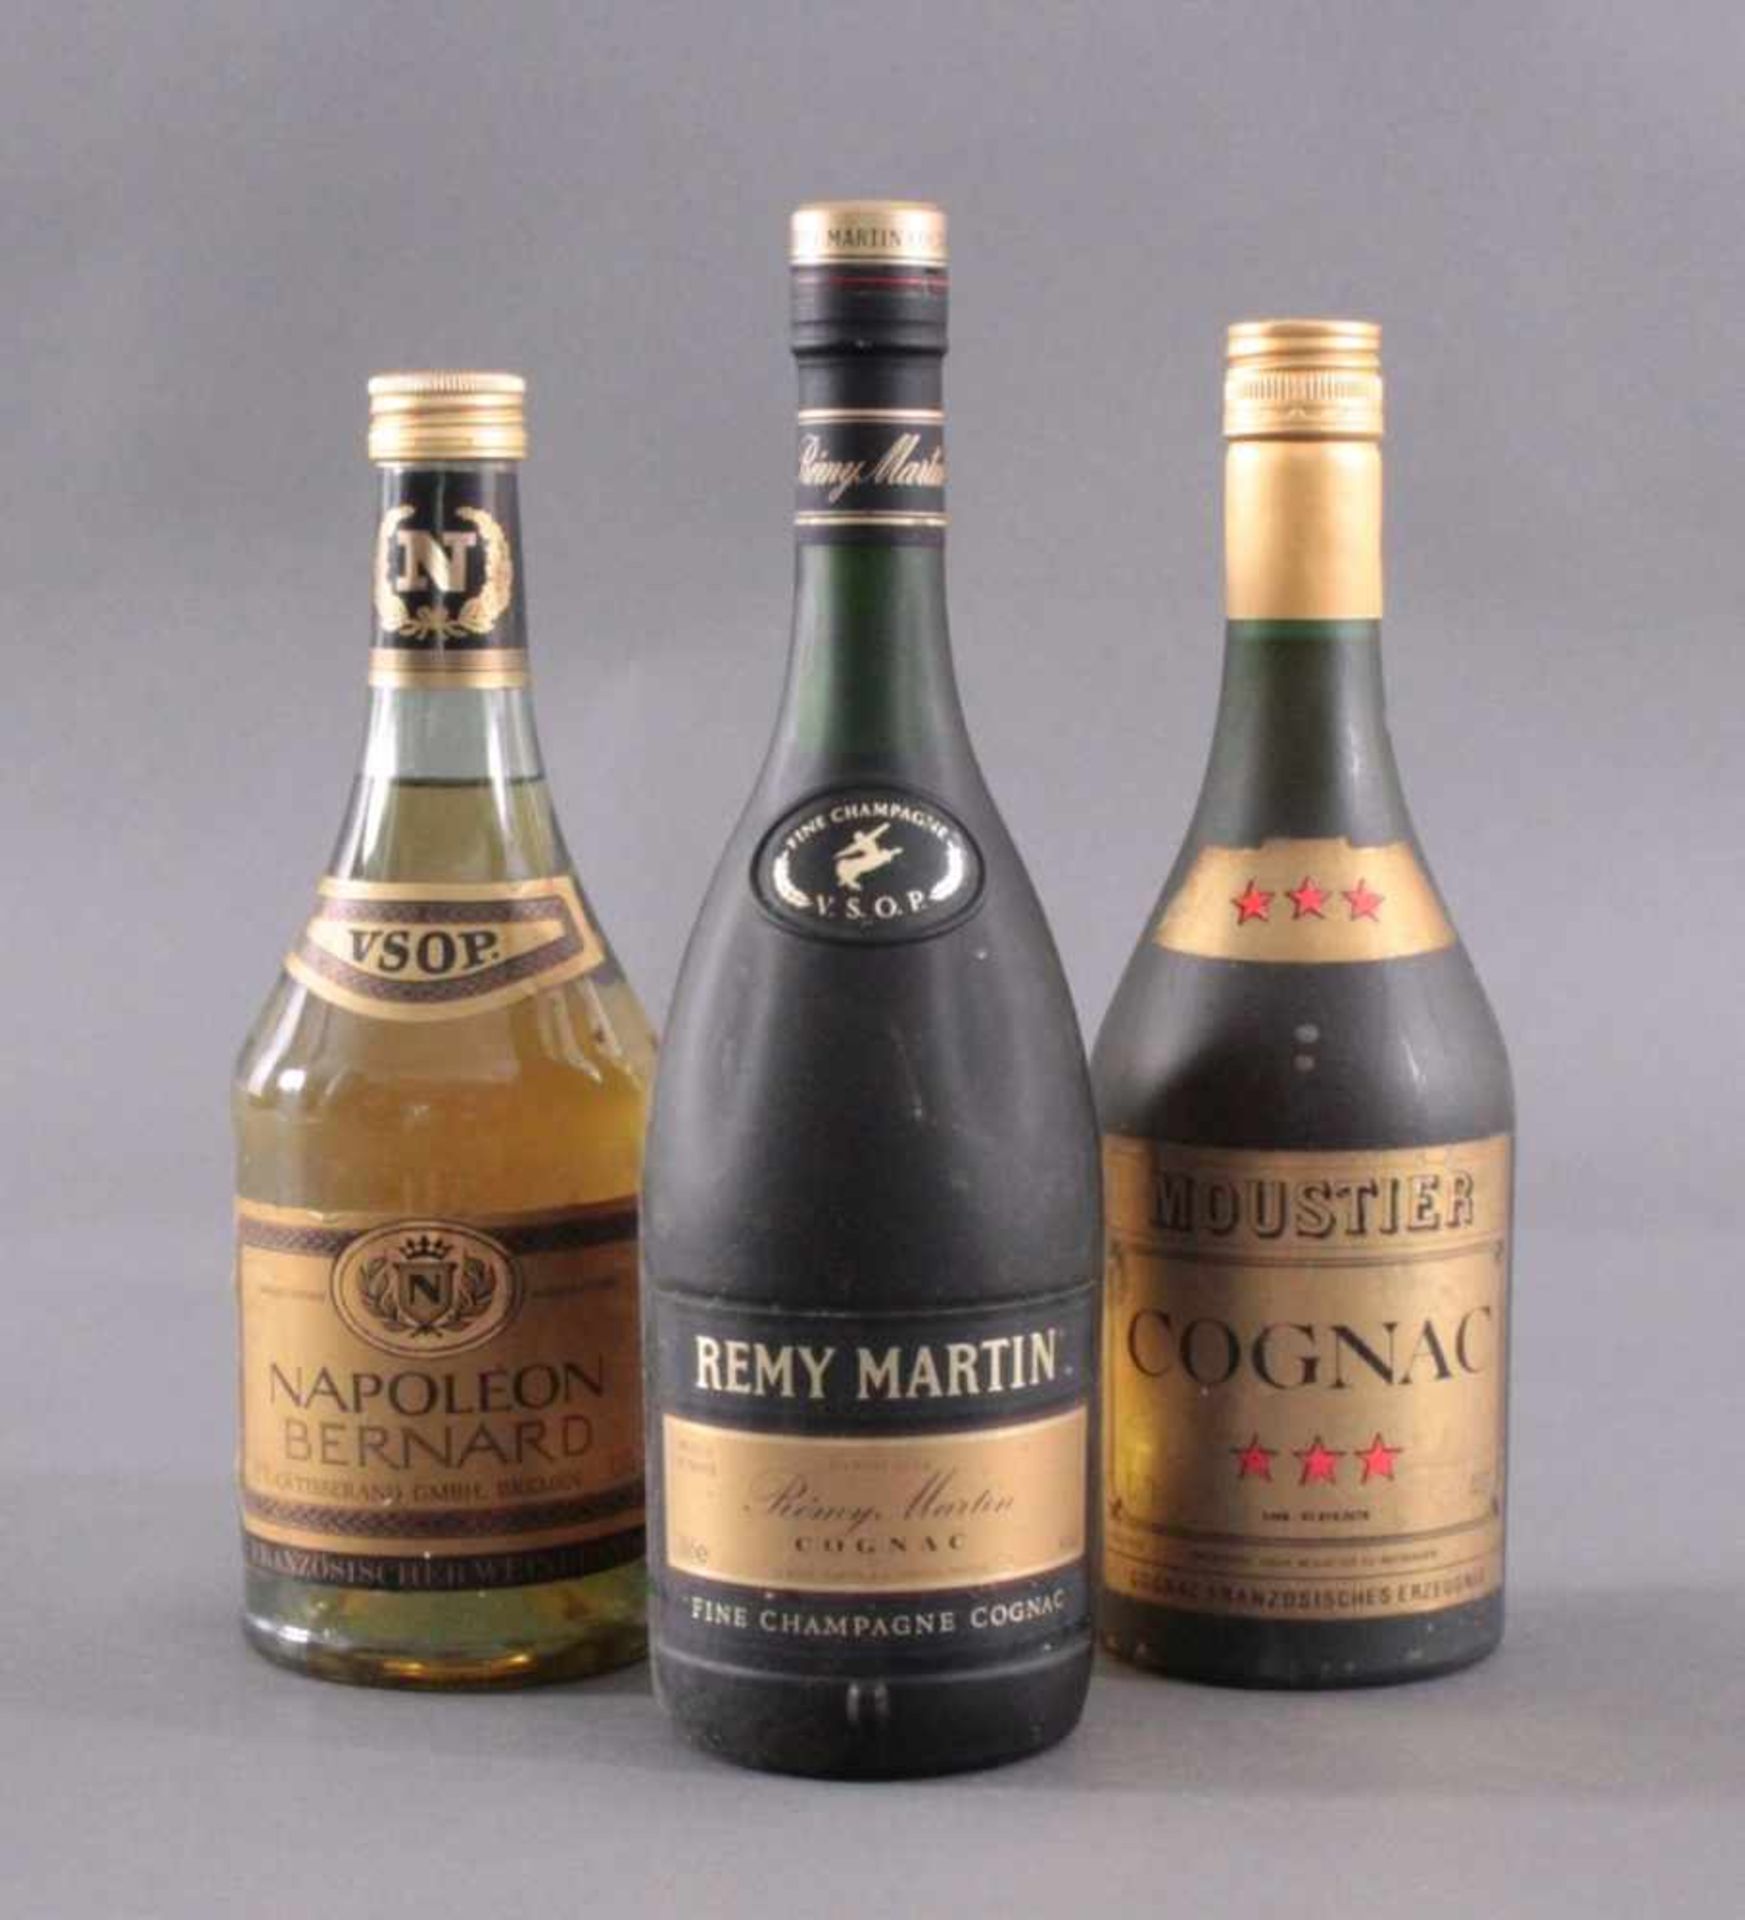 3 Flaschen Cognac1x Remy Martin V.S.O.P.1x Napoleon Bernard VSOP.1x Moustier 3 Sterne.